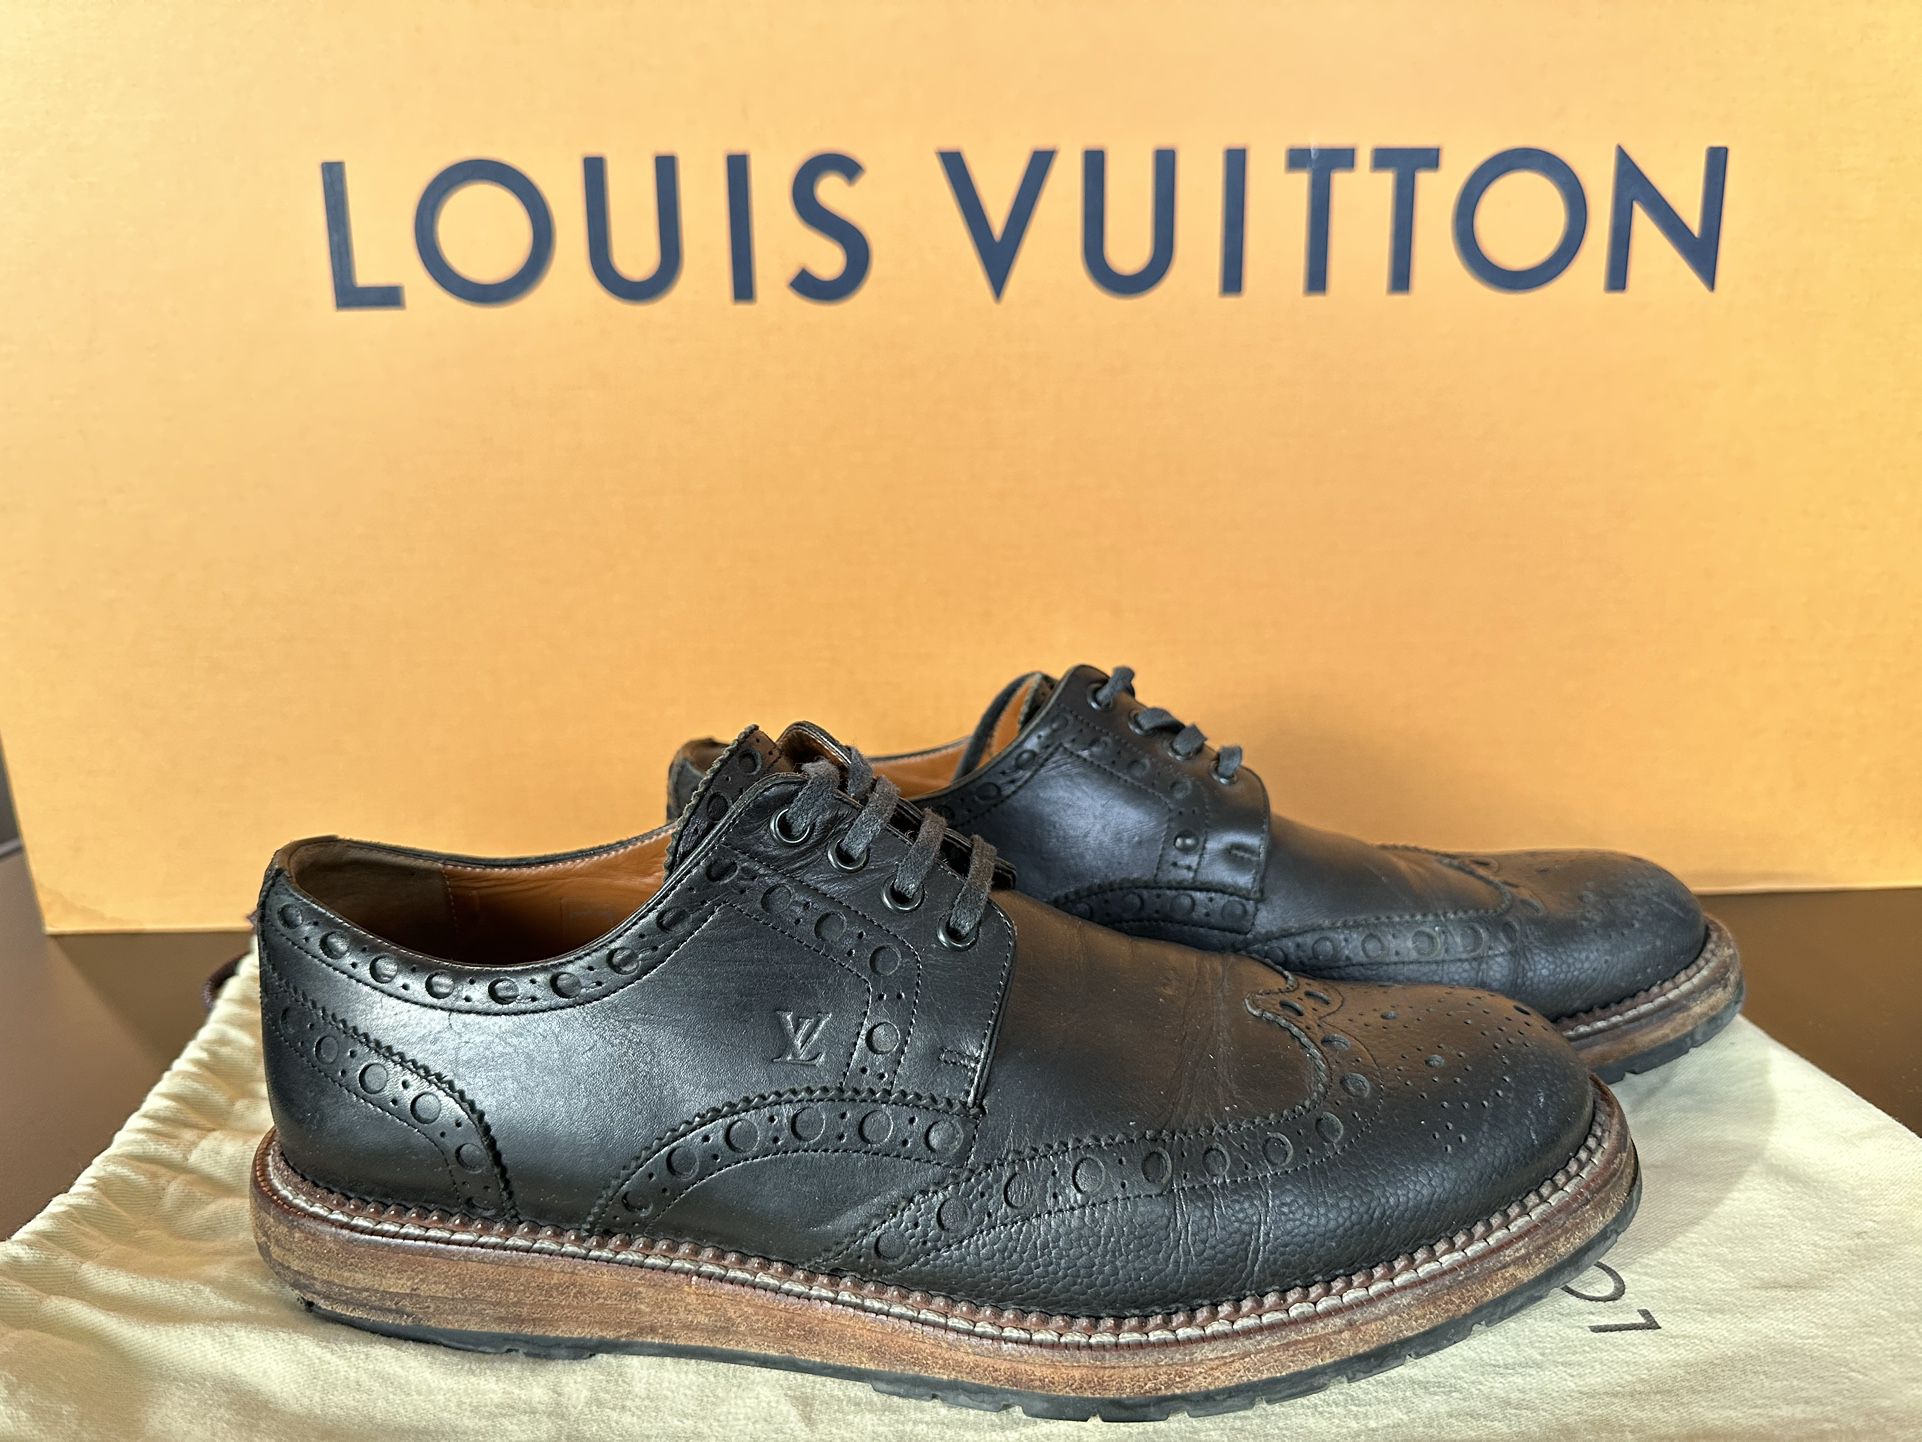 Louis Vuitton Oxford Black Leather Bag